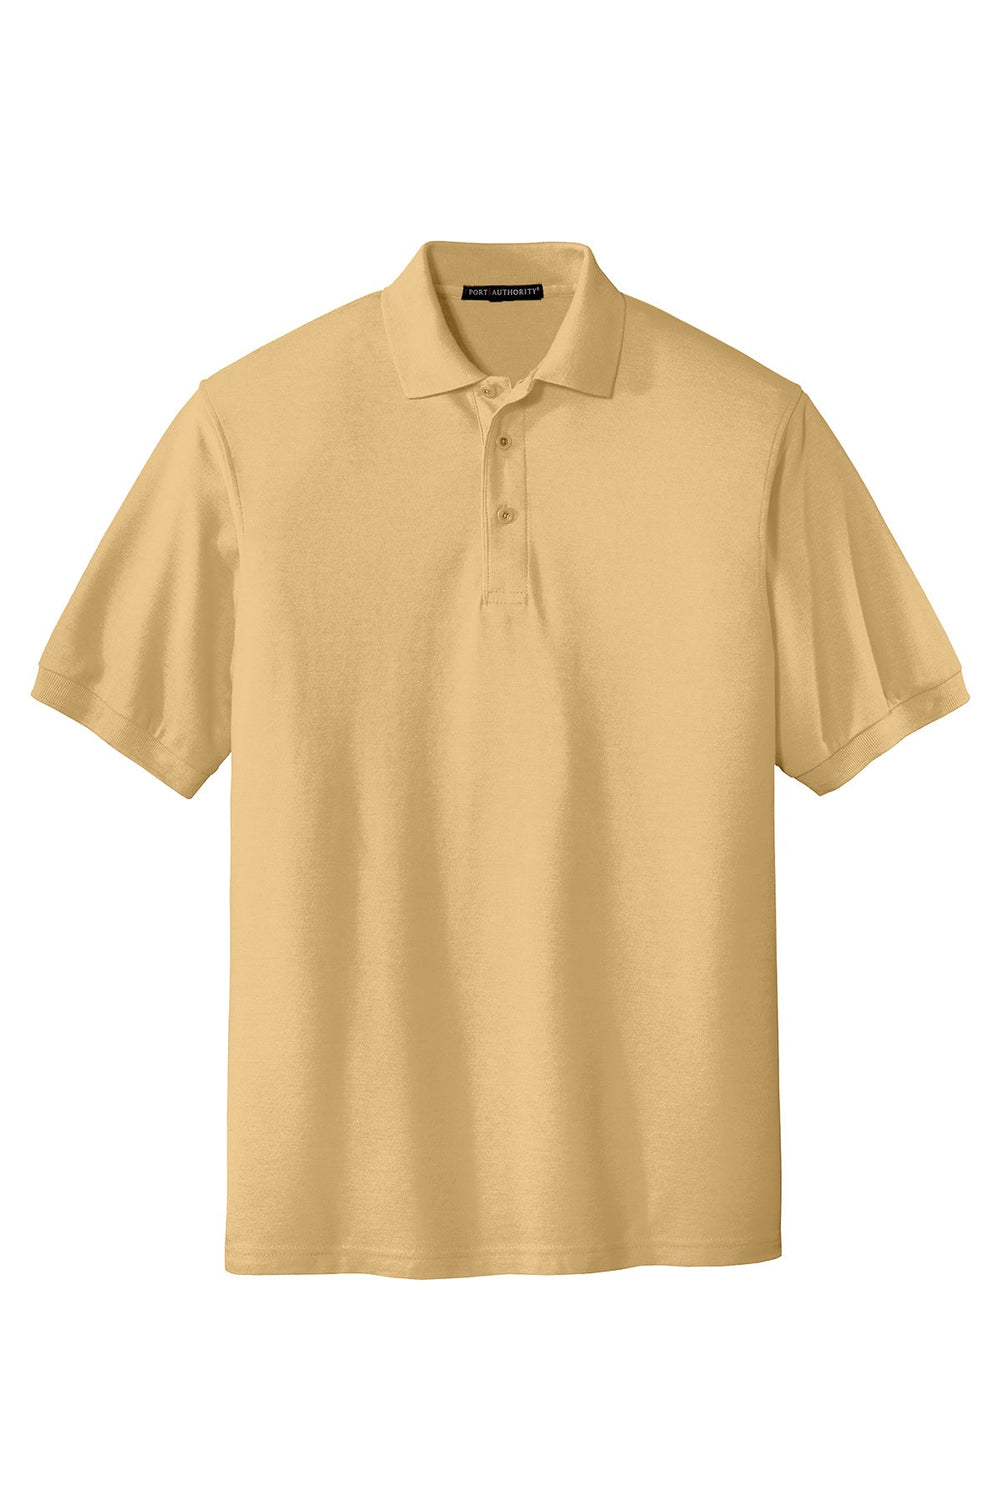 CCS - K500 Port Authority Unisex Silk Touch Polo - Premium School Uniform from Pat's Monograms - Just $20! Shop now at Pat's Monograms